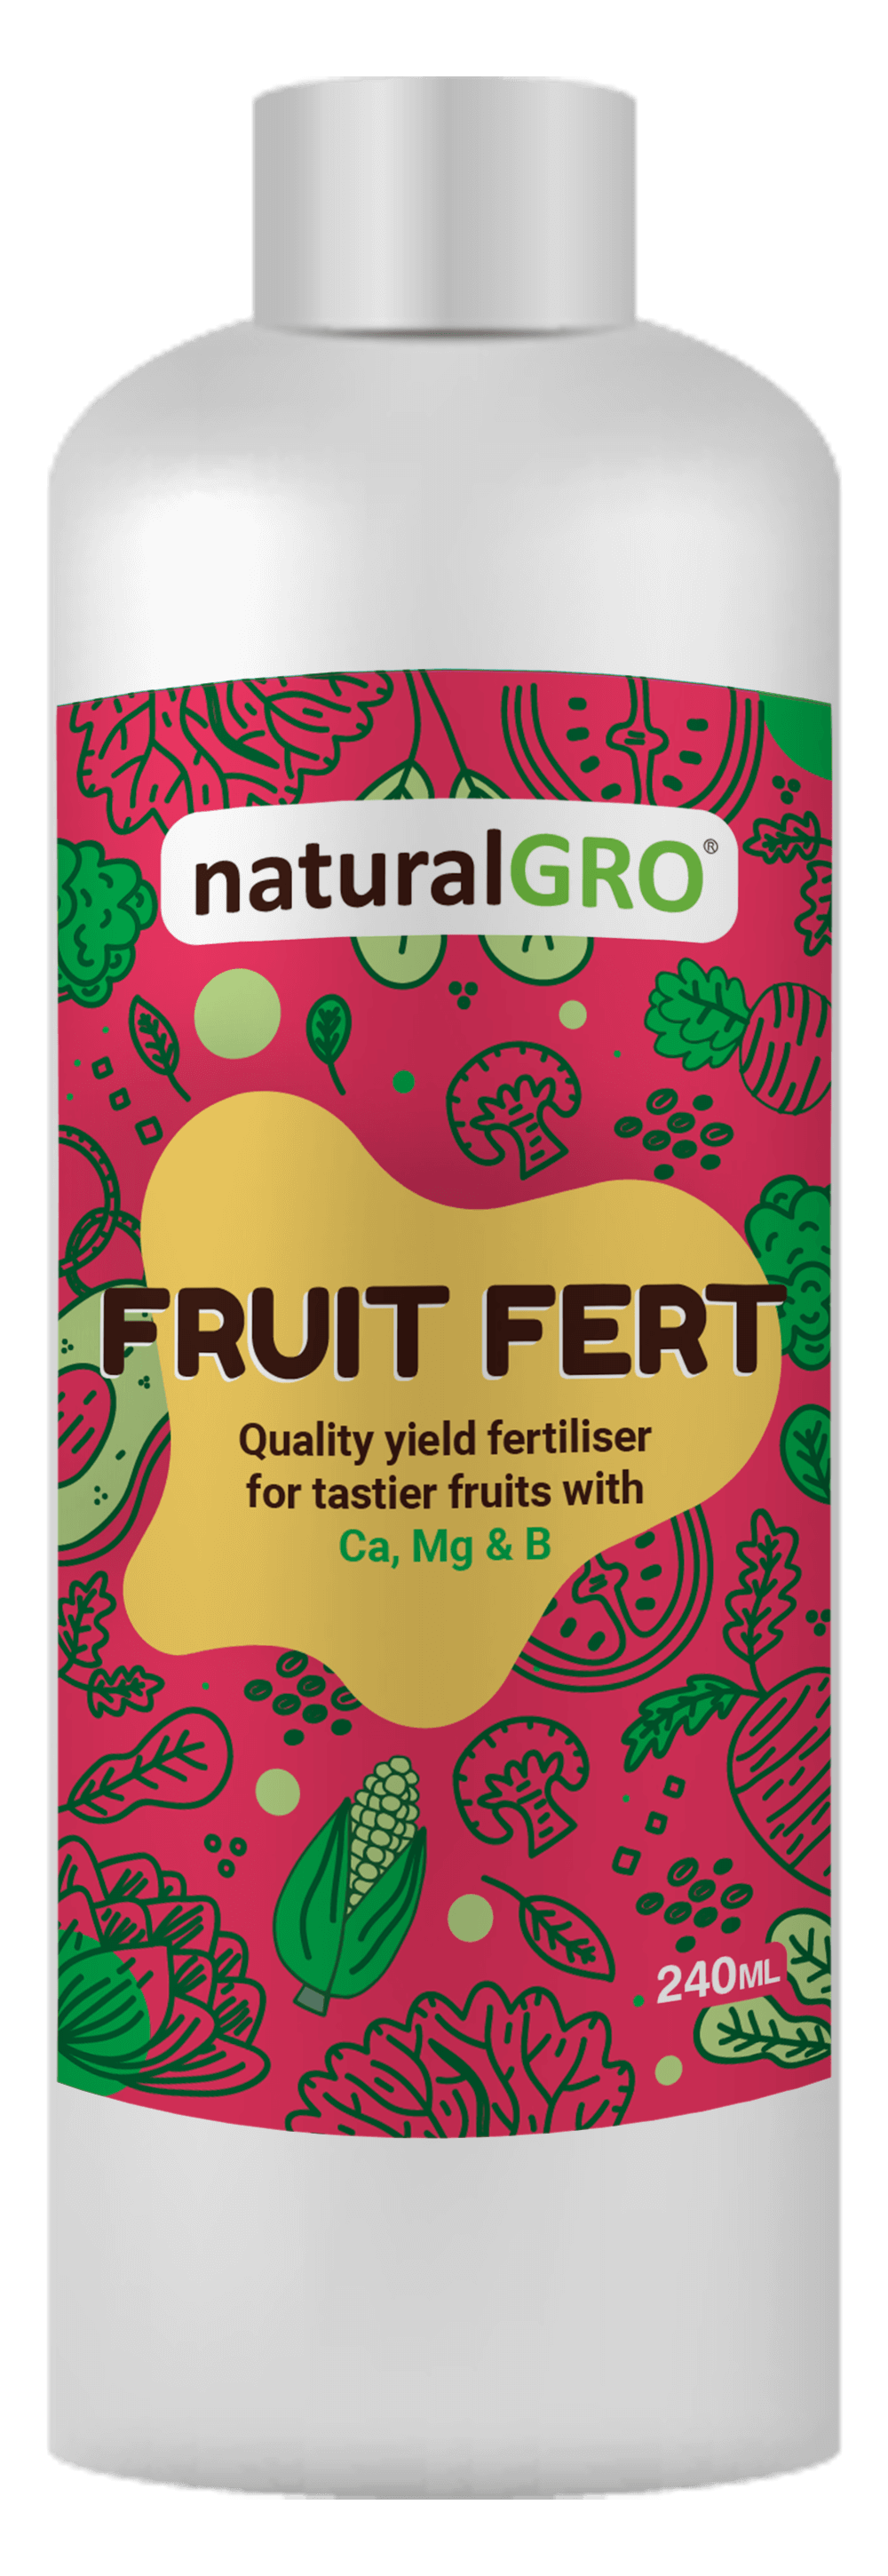 Fruit Fert Concentrate 240ml